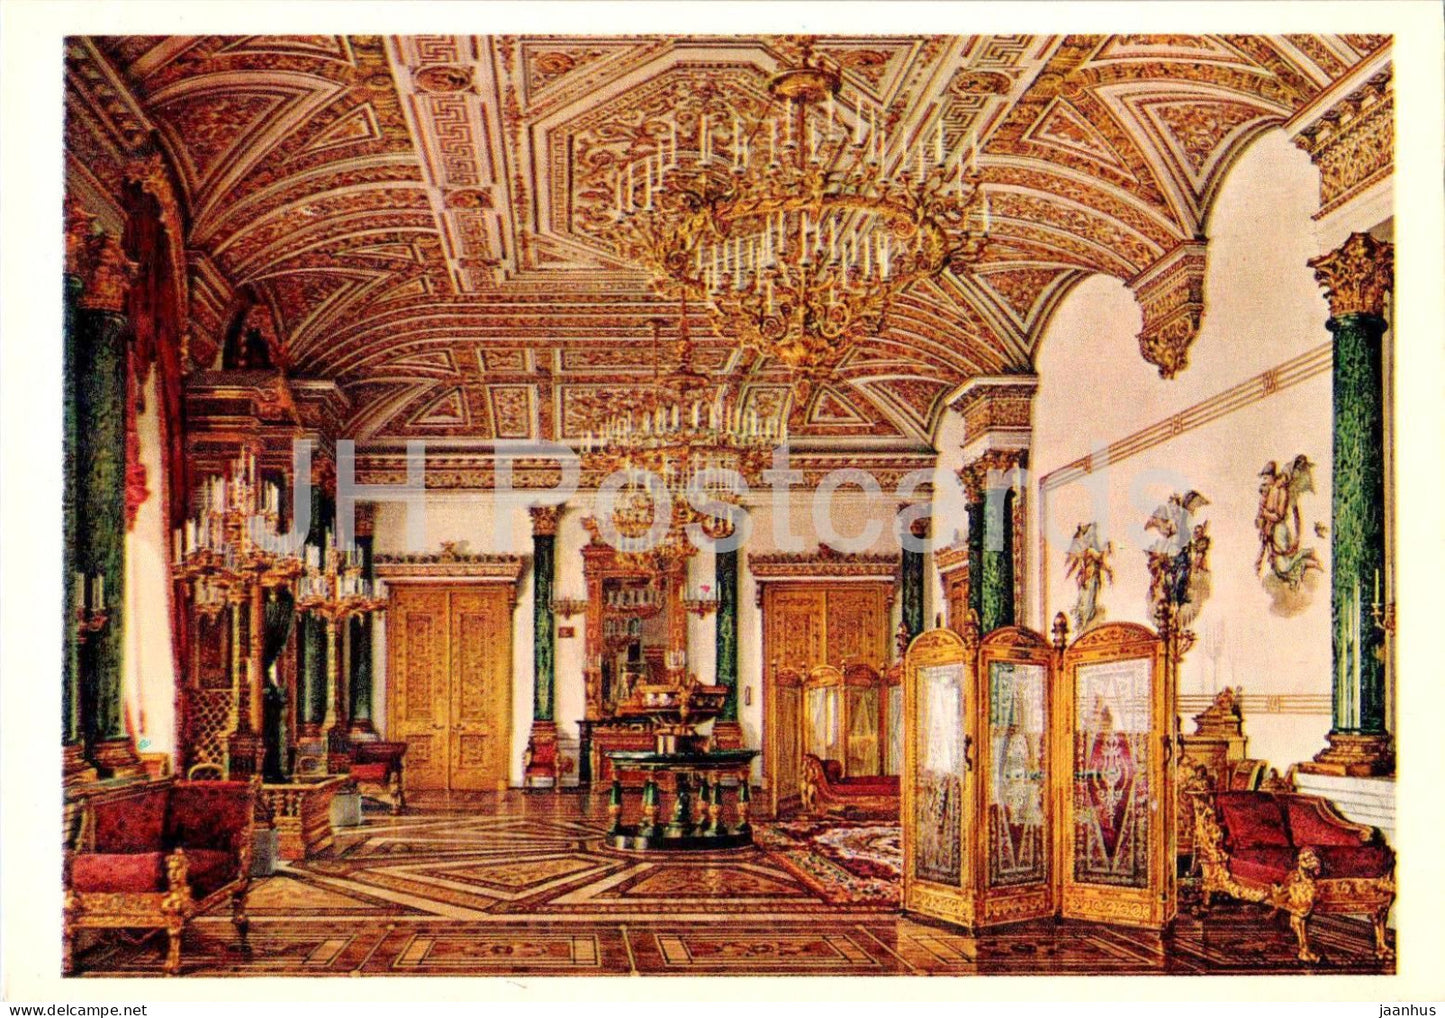 Leningrad - St Petersburg - Winter Palace - Malachite Hall - painting by Oukhtomski - 1975 - Russia USSR - unused - JH Postcards